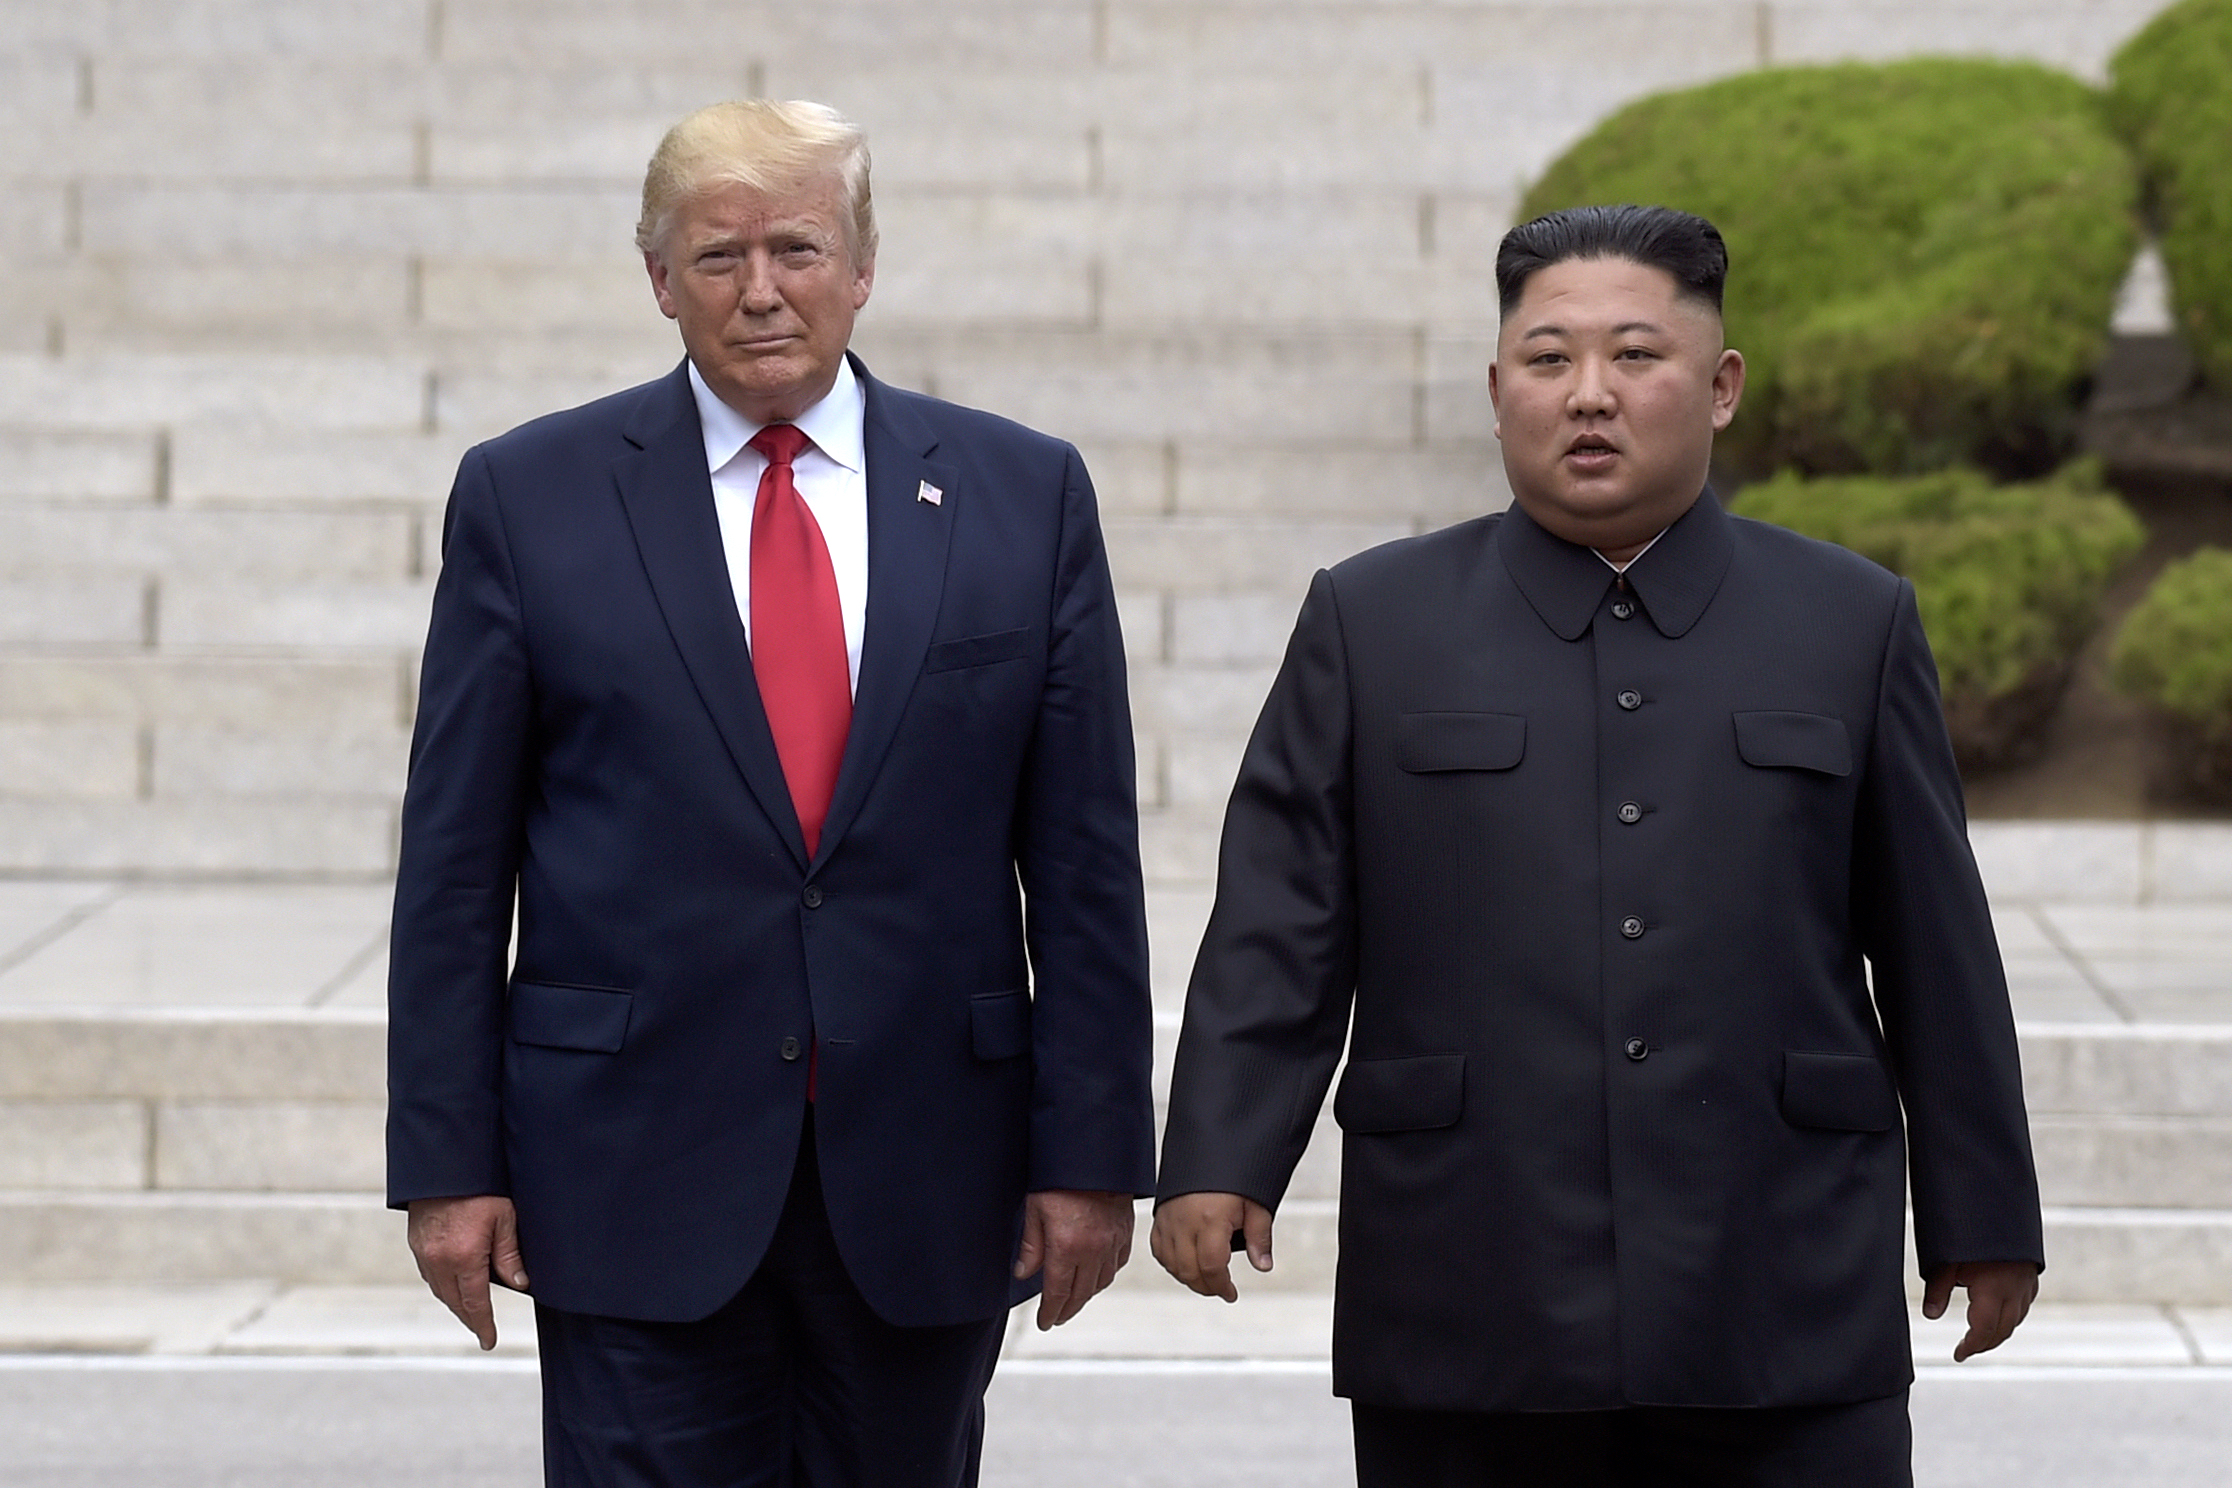 President Donald Trump meets with North Korean leader Kim Jong Un